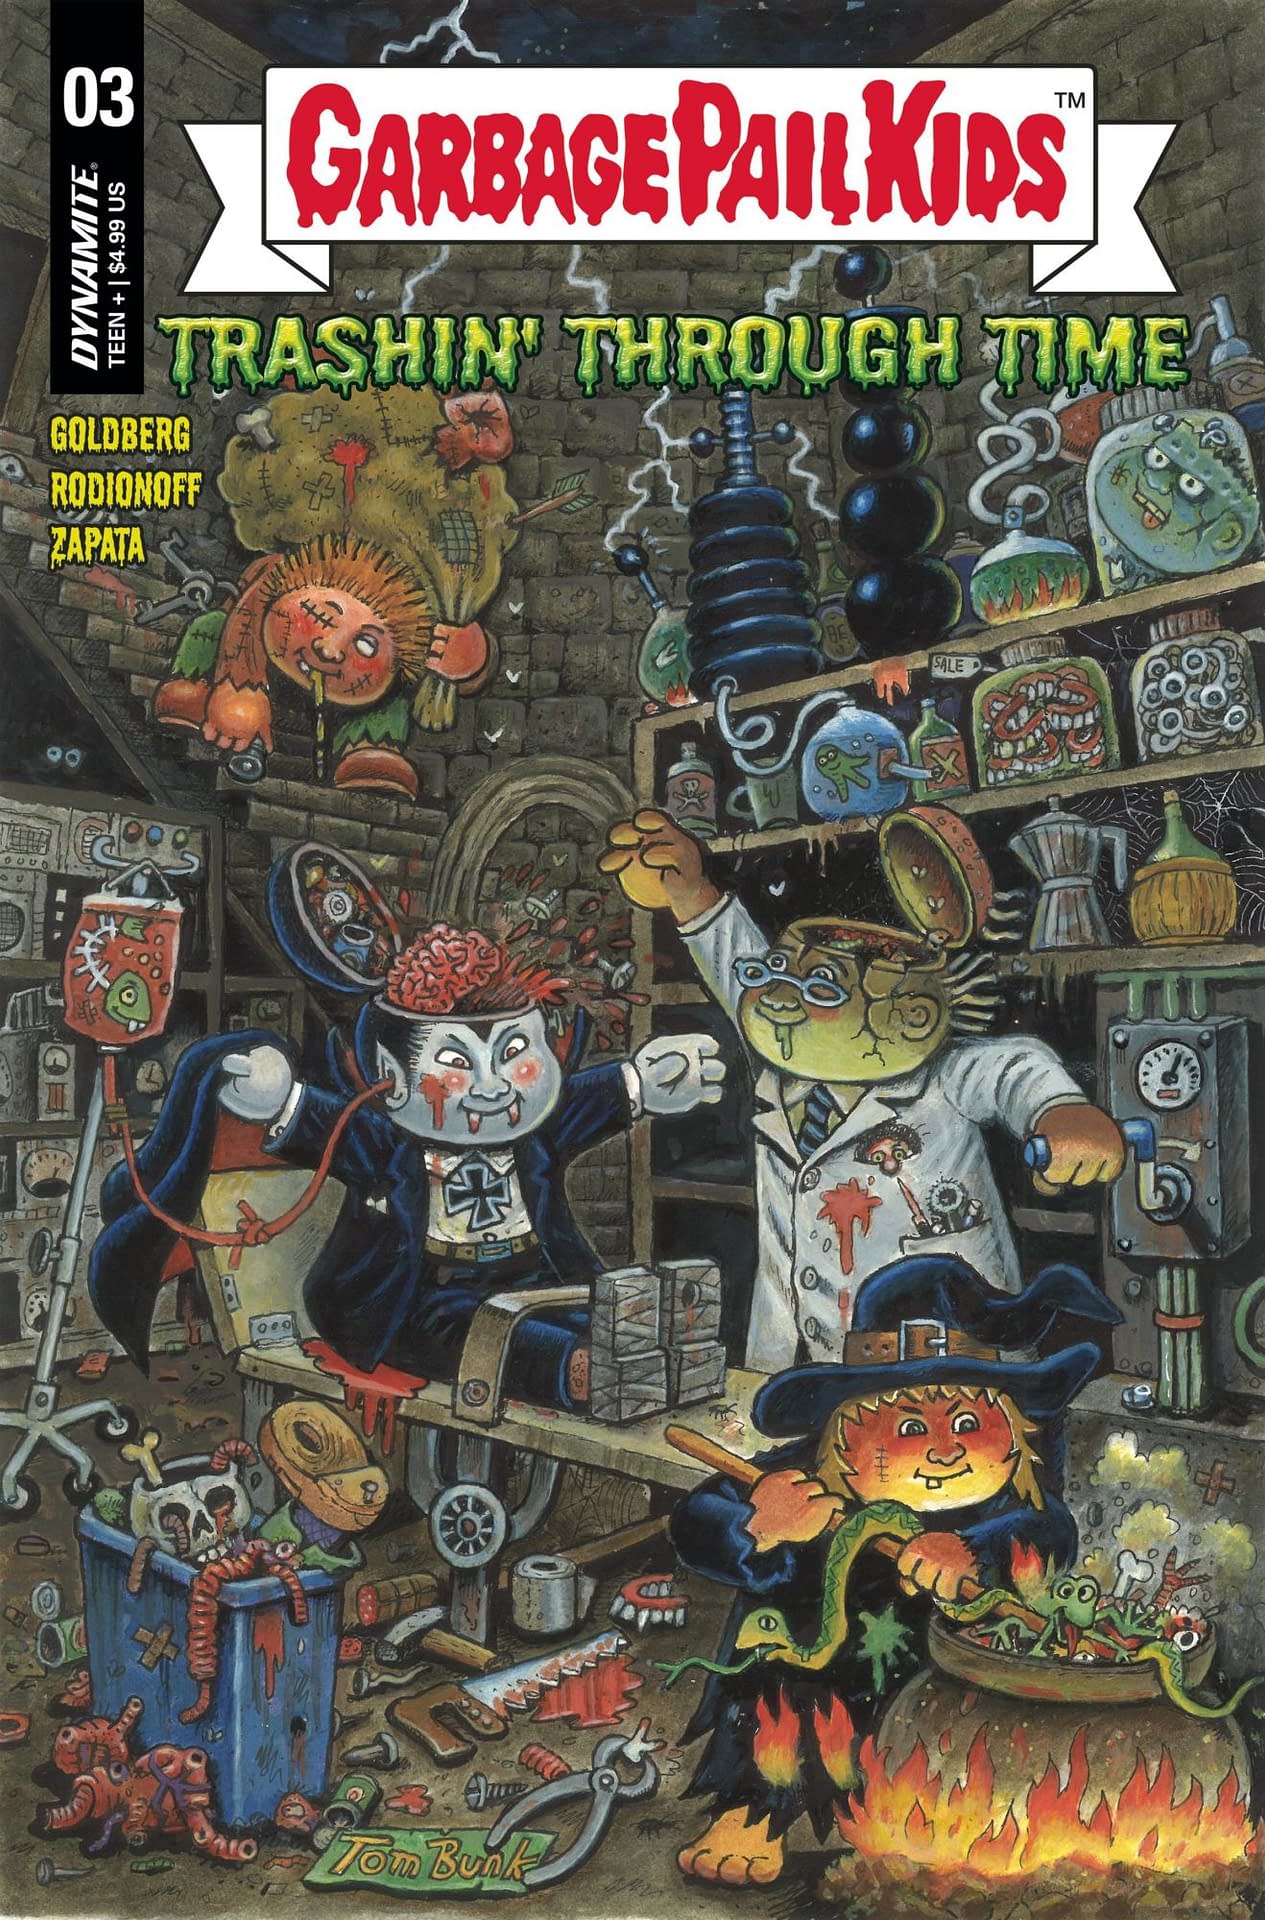 Cover image for Garbage Pail Kids: Trashin' Through Time #3